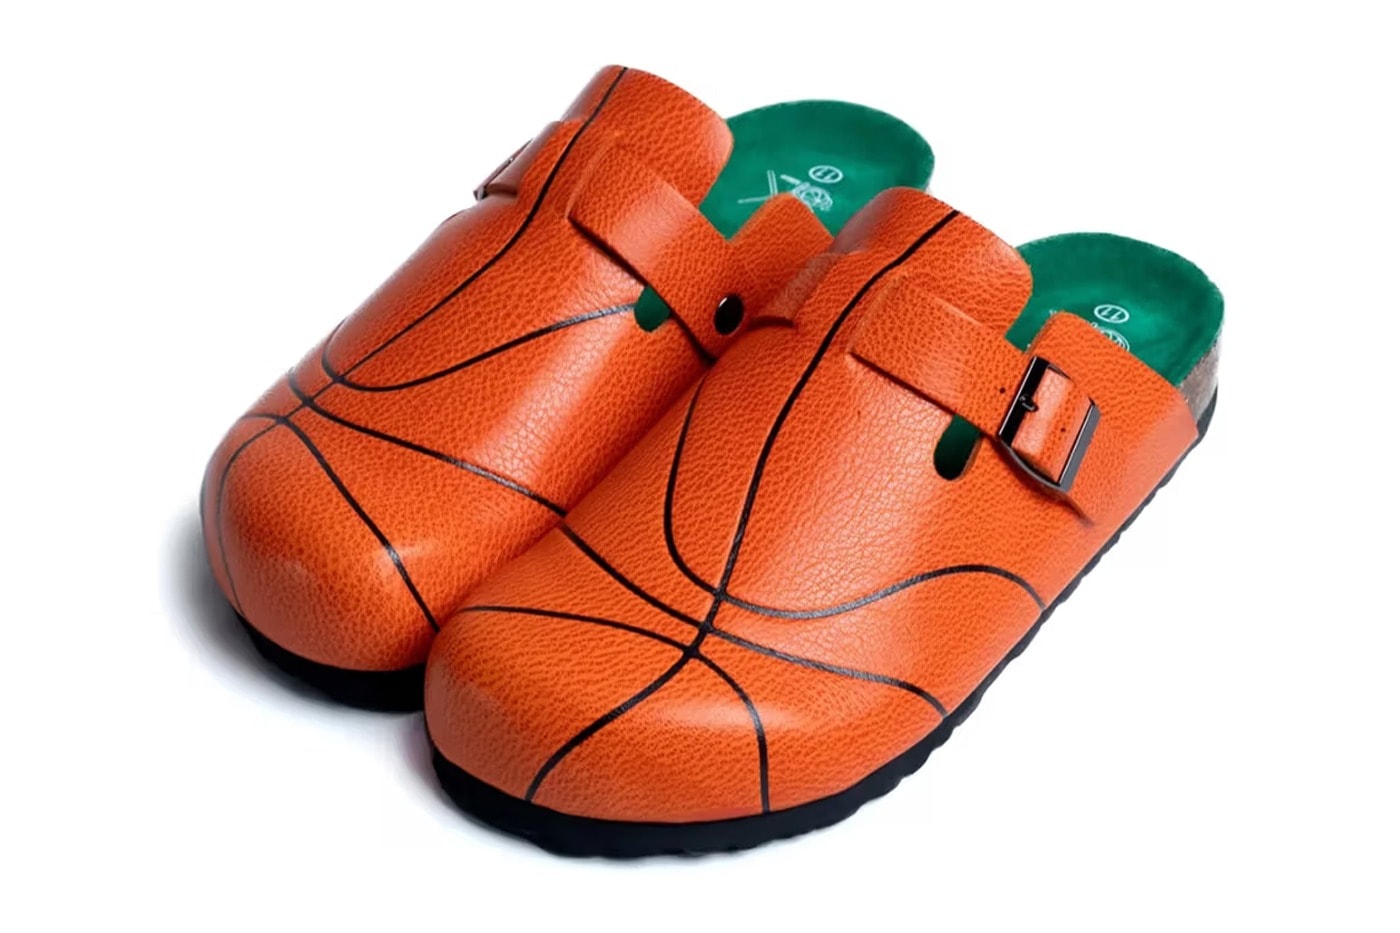 Scary Kittles 推出籃球造型全新鞋款「The Kaman」